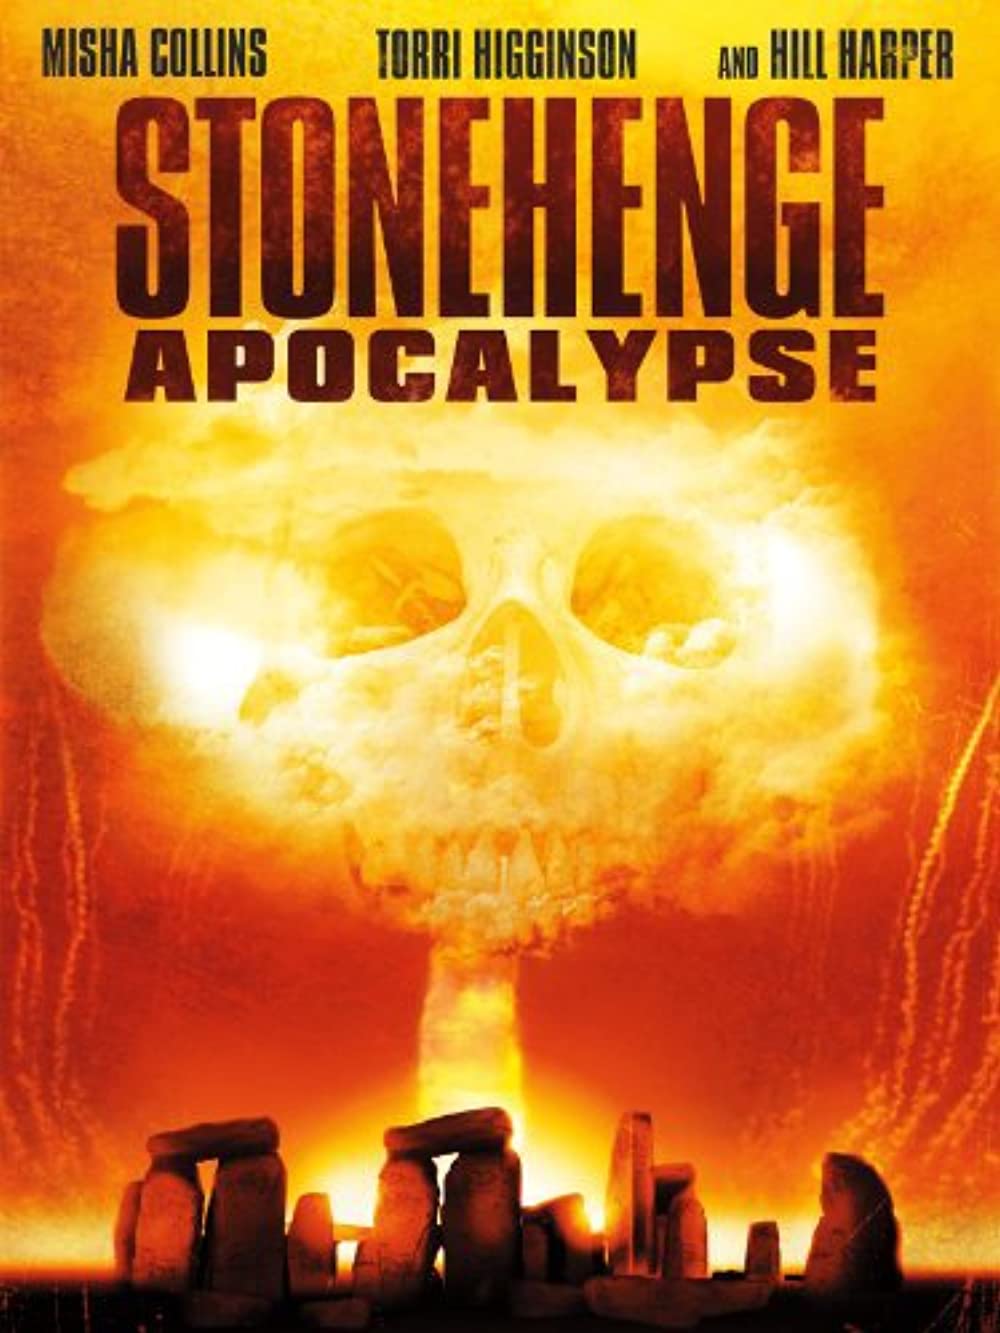 Download Stonehenge Apocalypse Movie | Watch Stonehenge Apocalypse Download